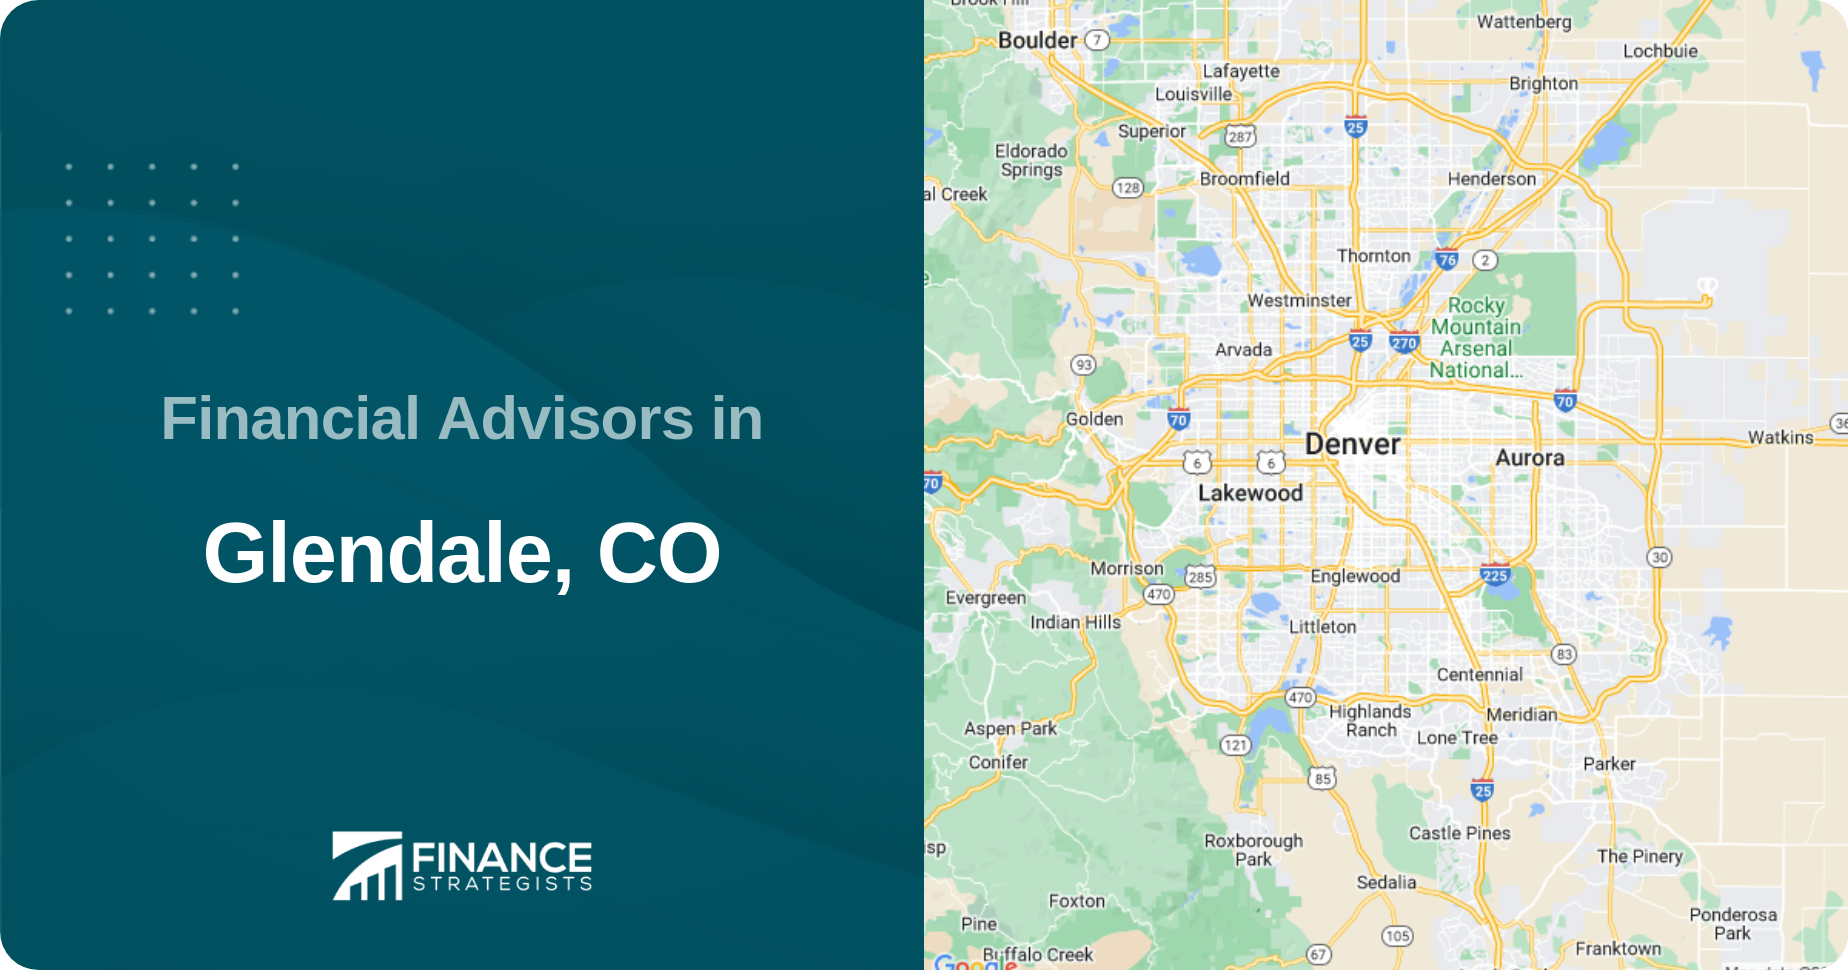 Financial Advisors in Glendale, CO